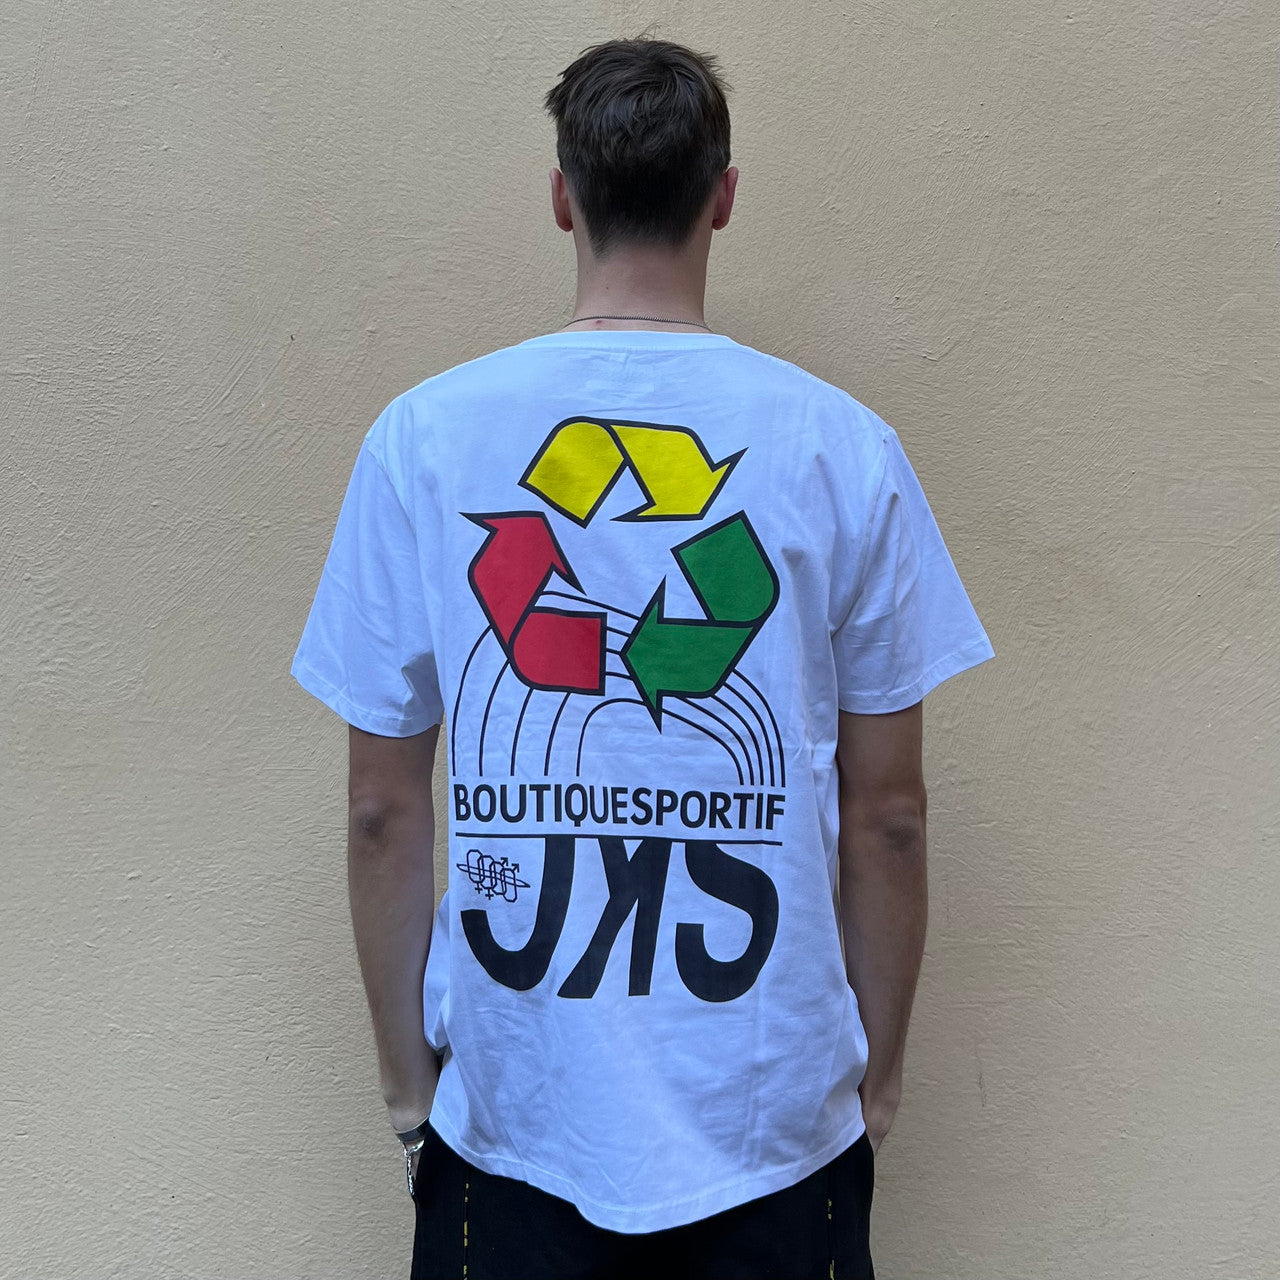 Boutique Sportif Reuse Recycle Reggae White Tshirt